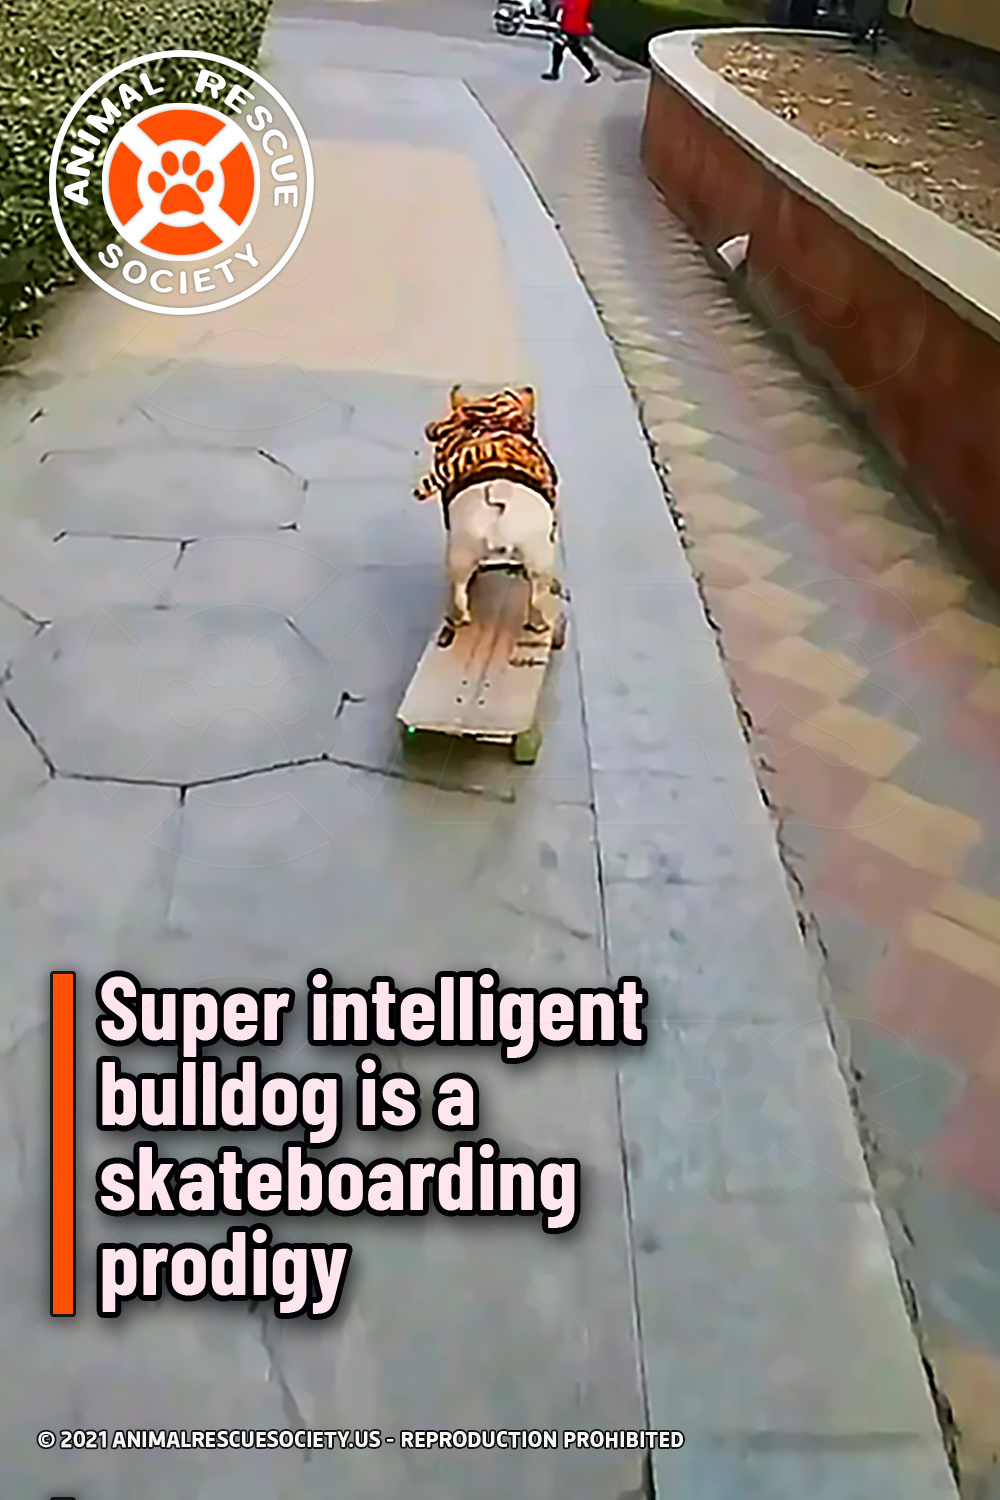 Super intelligent bulldog is a skateboarding prodigy